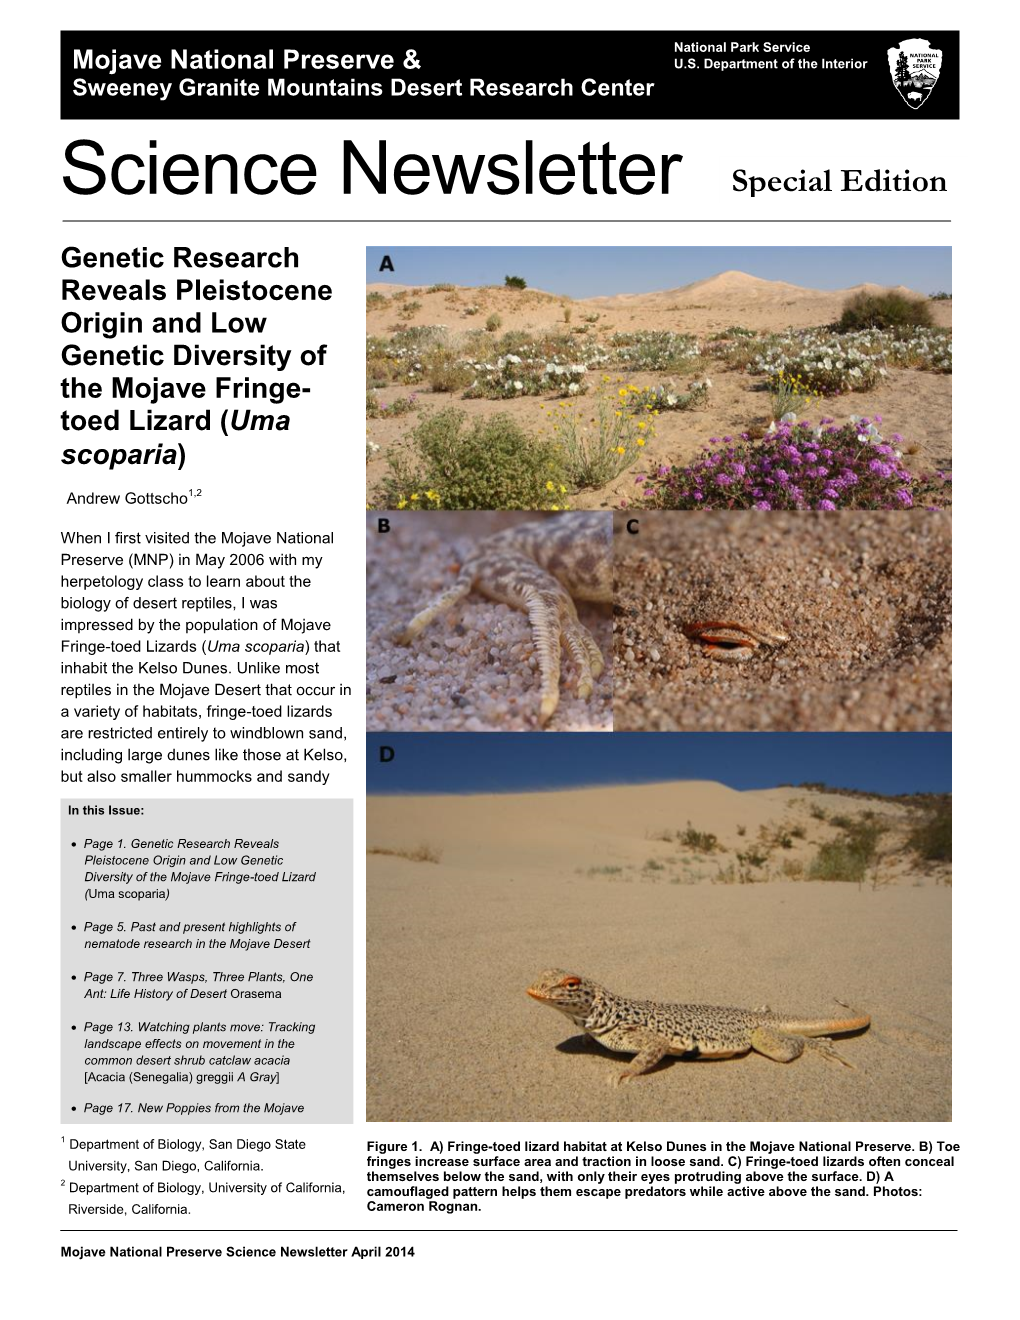 Science Newsletter